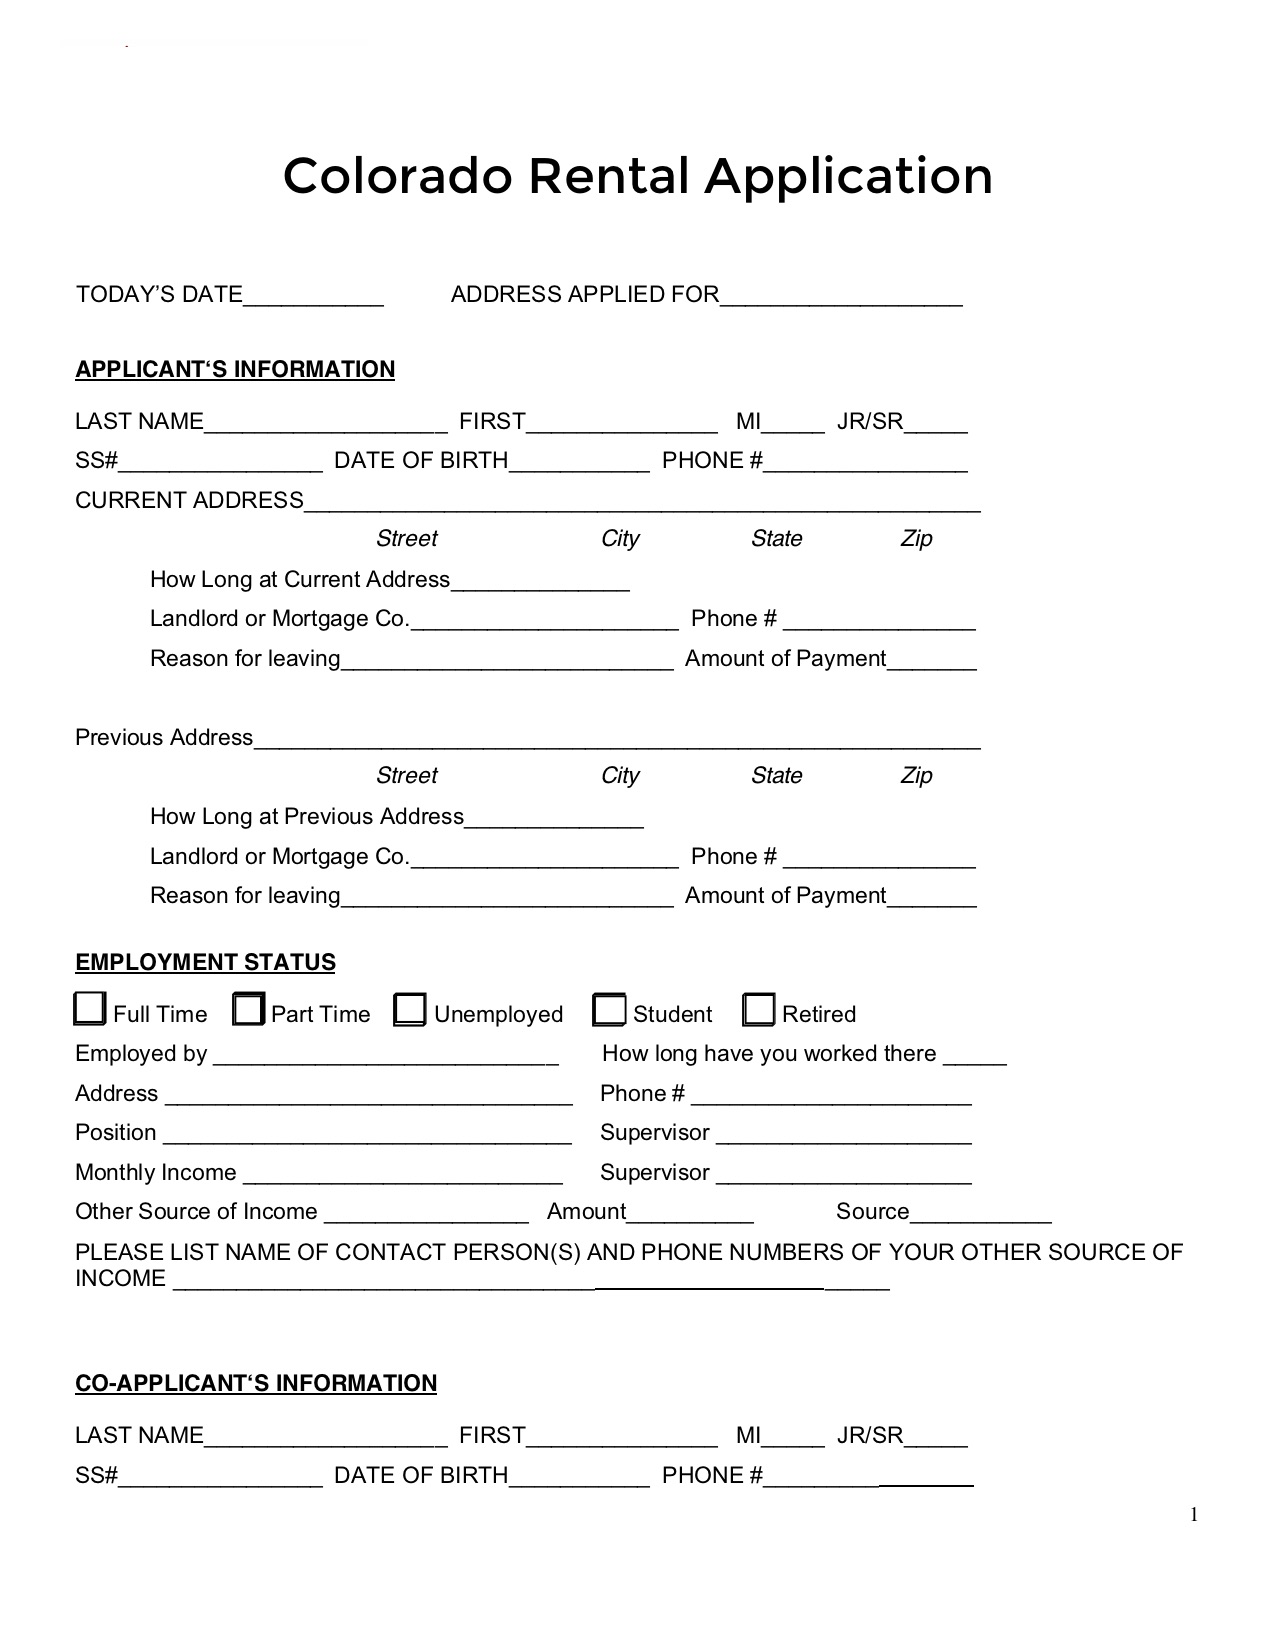 free-colorado-rental-application-form-pdf